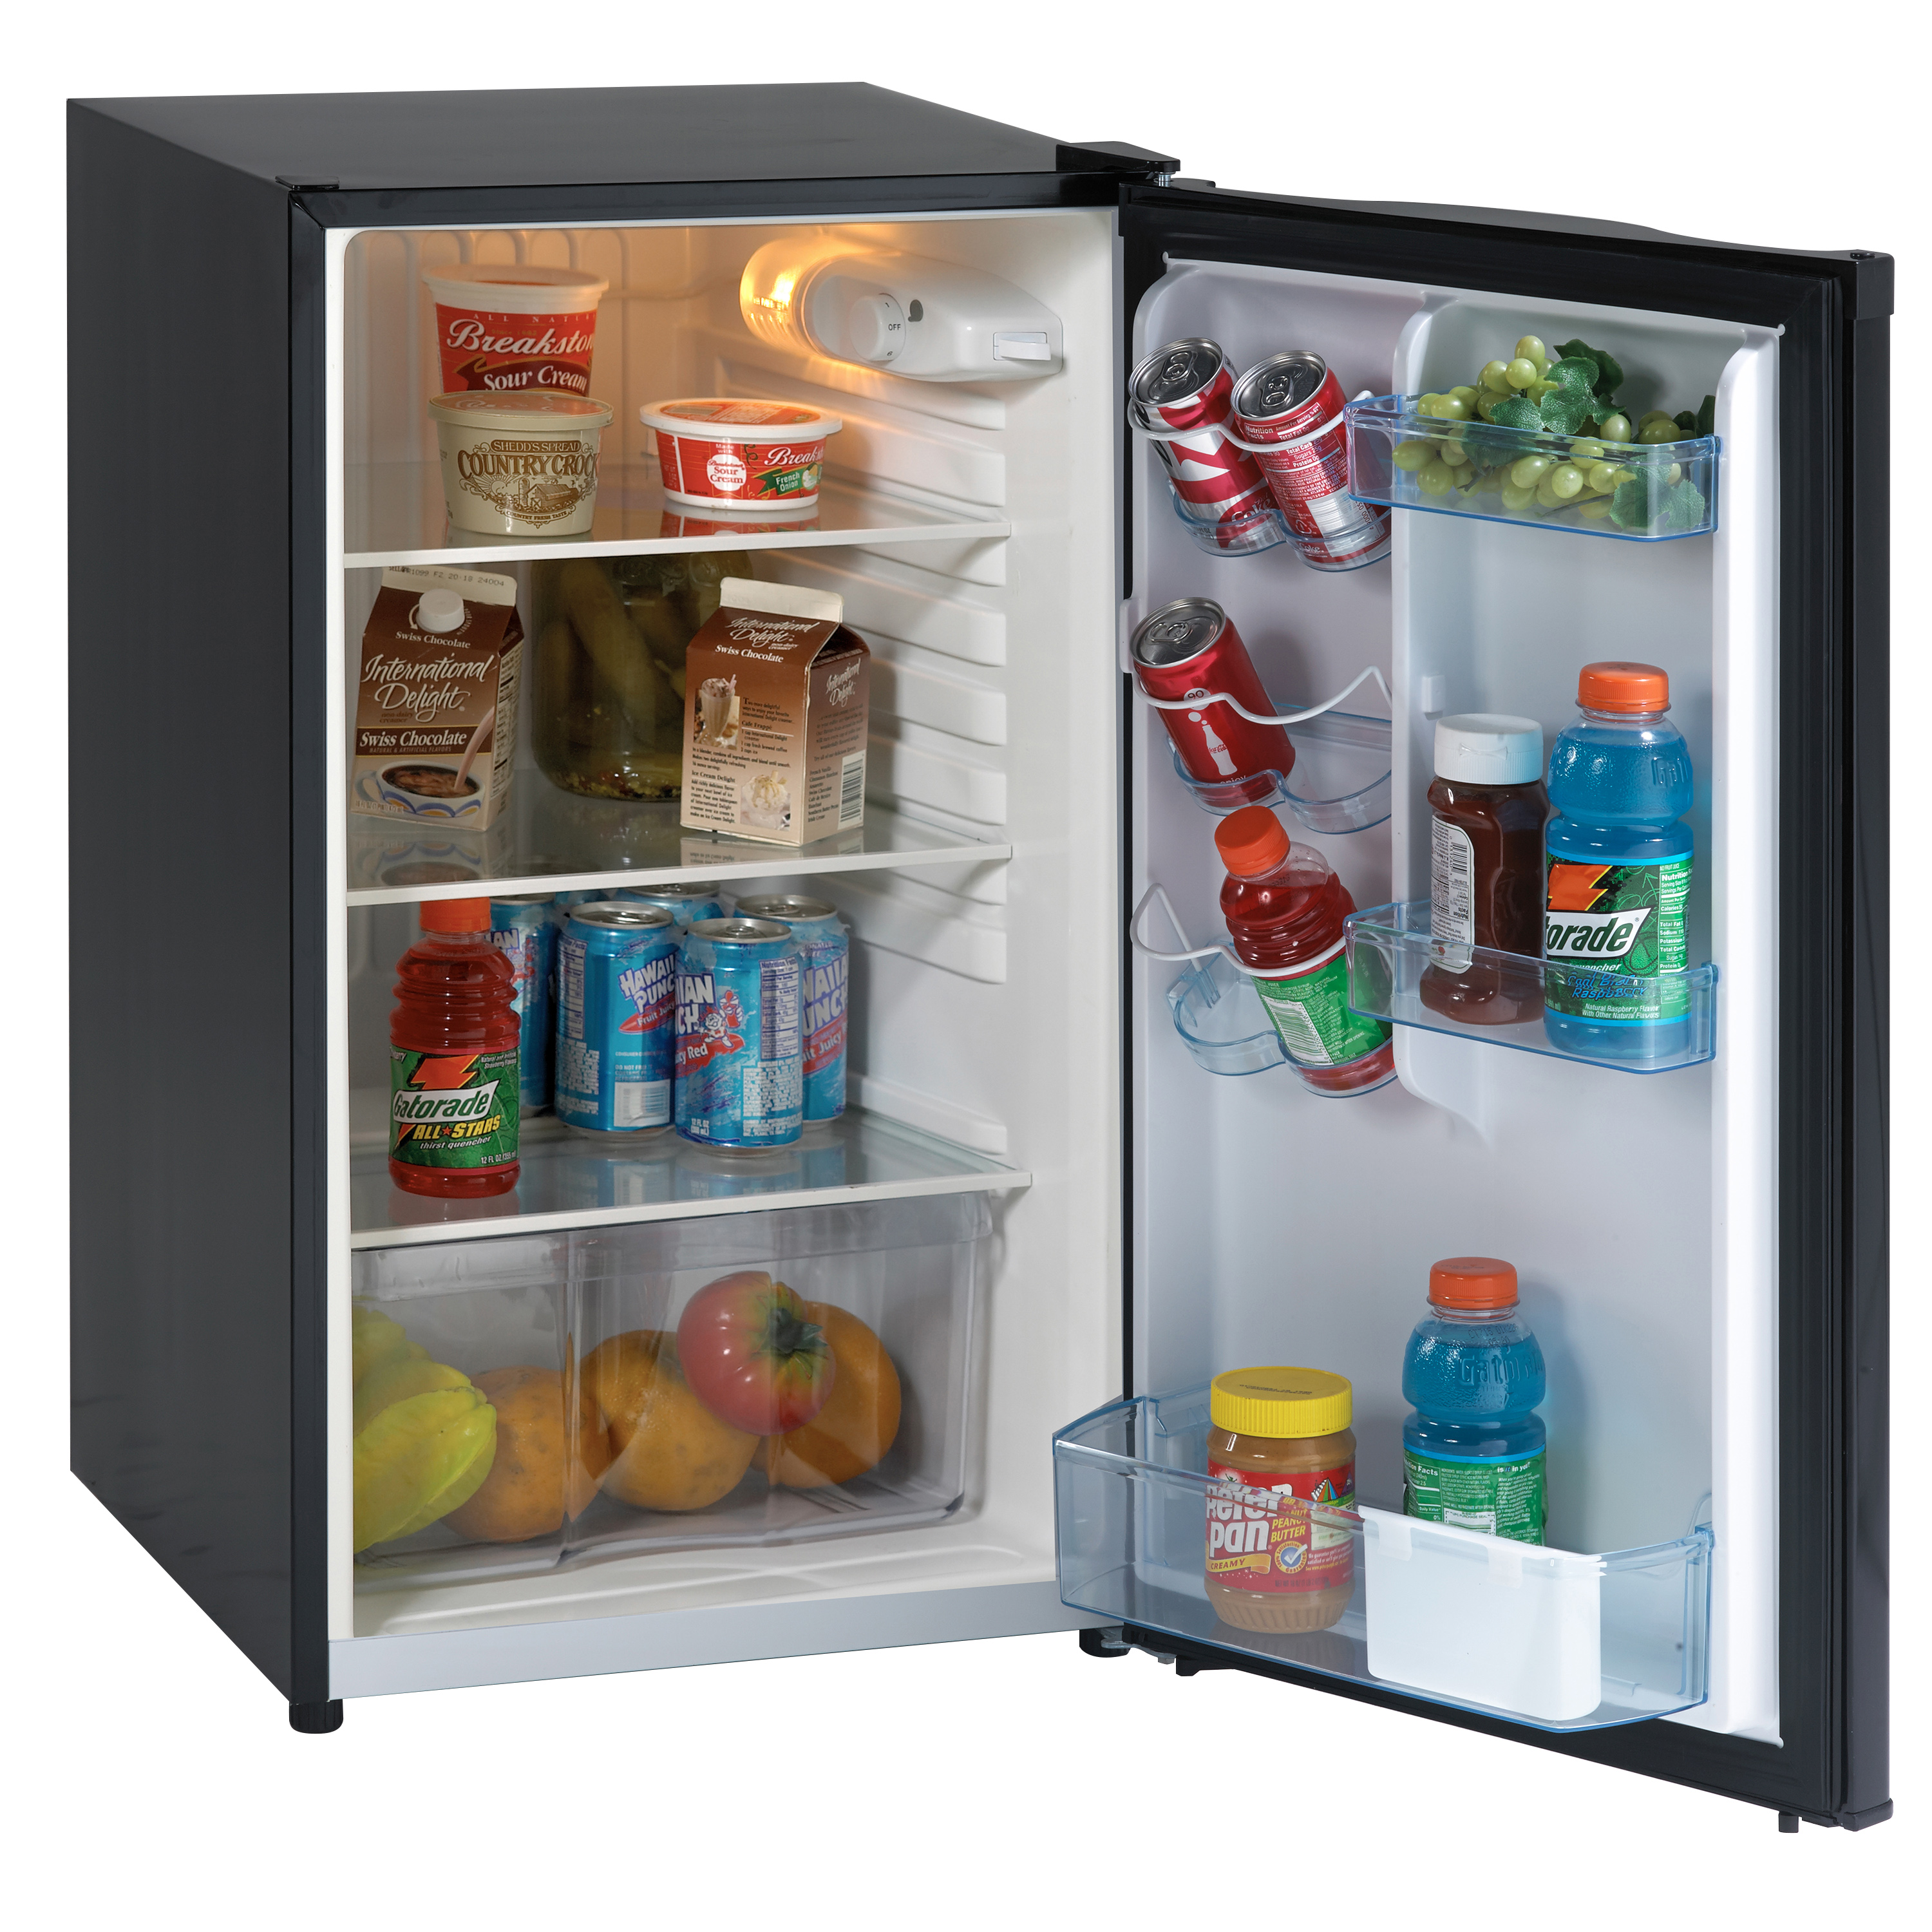 Avanti 4.4 cu. ft. Compact Refrigerator, in Black (AR4446B) - image 2 of 9